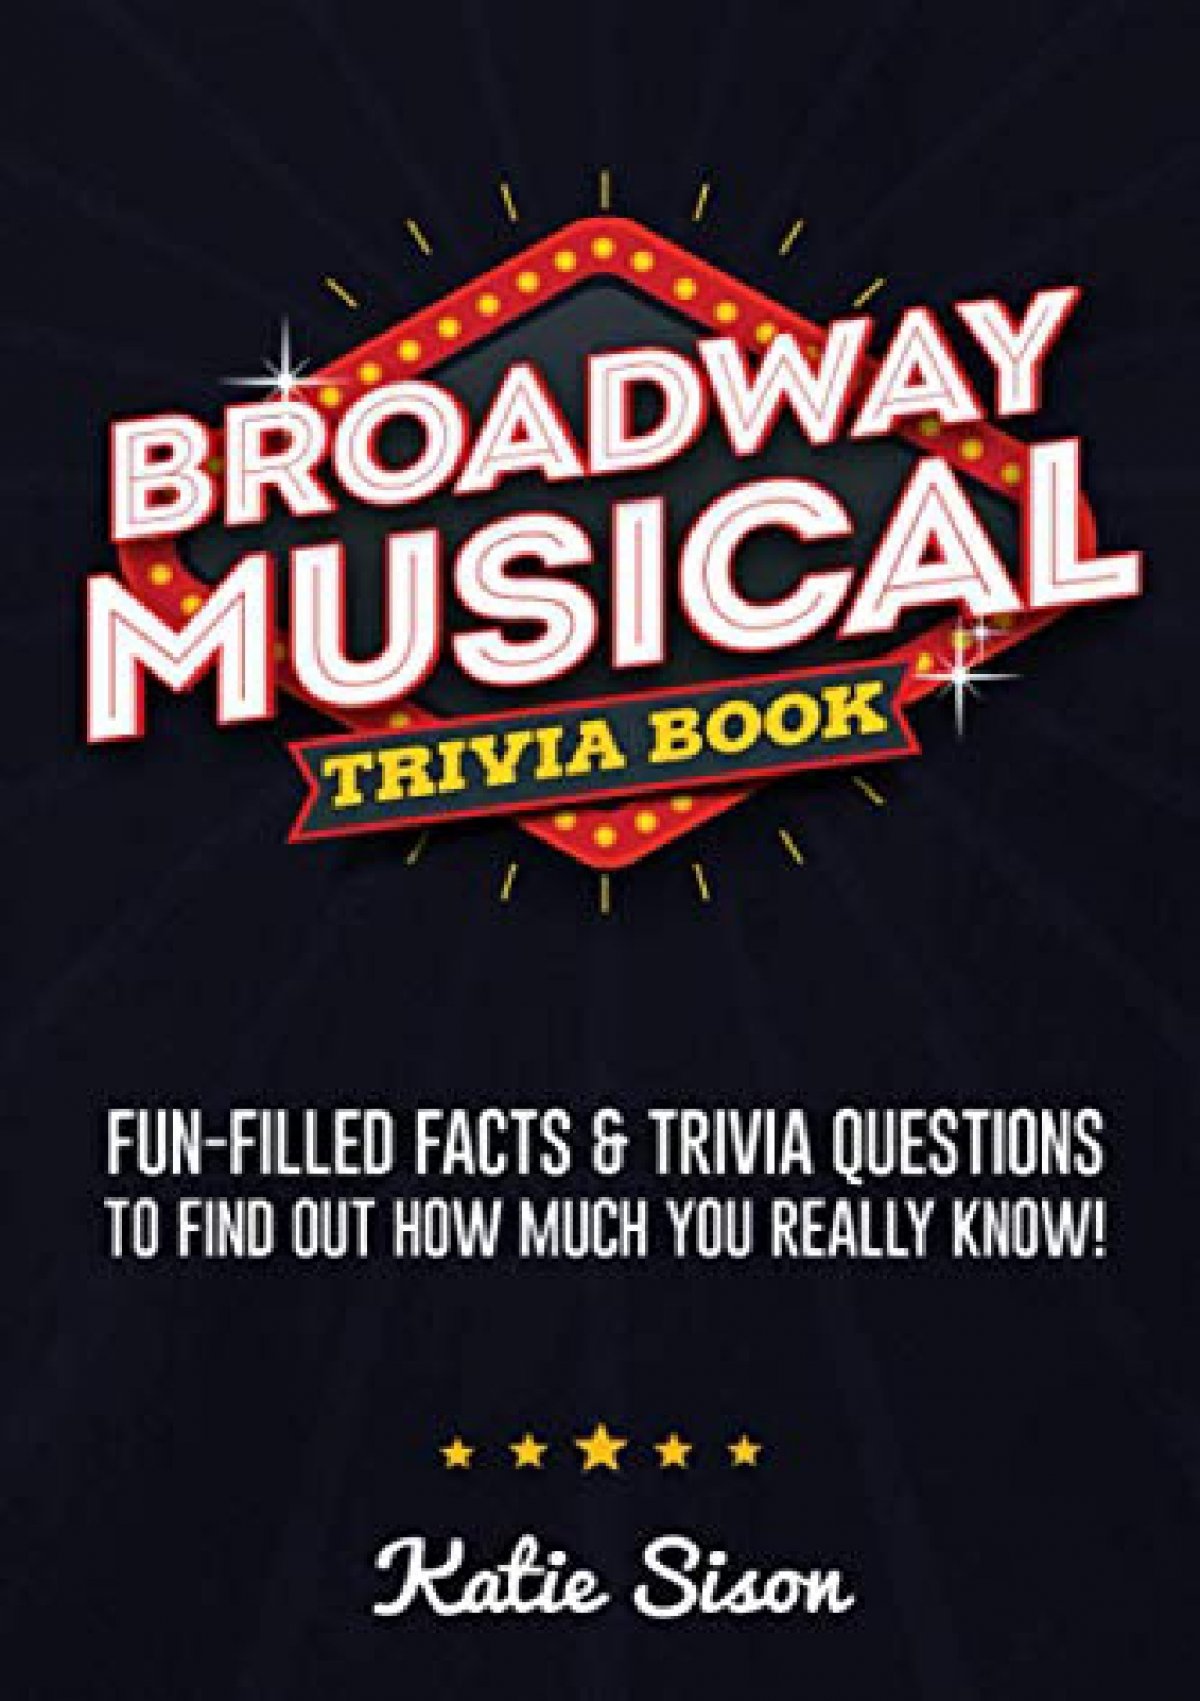 pdf-broadway-musical-trivia-book-fun-filled-facts-trivia-questions